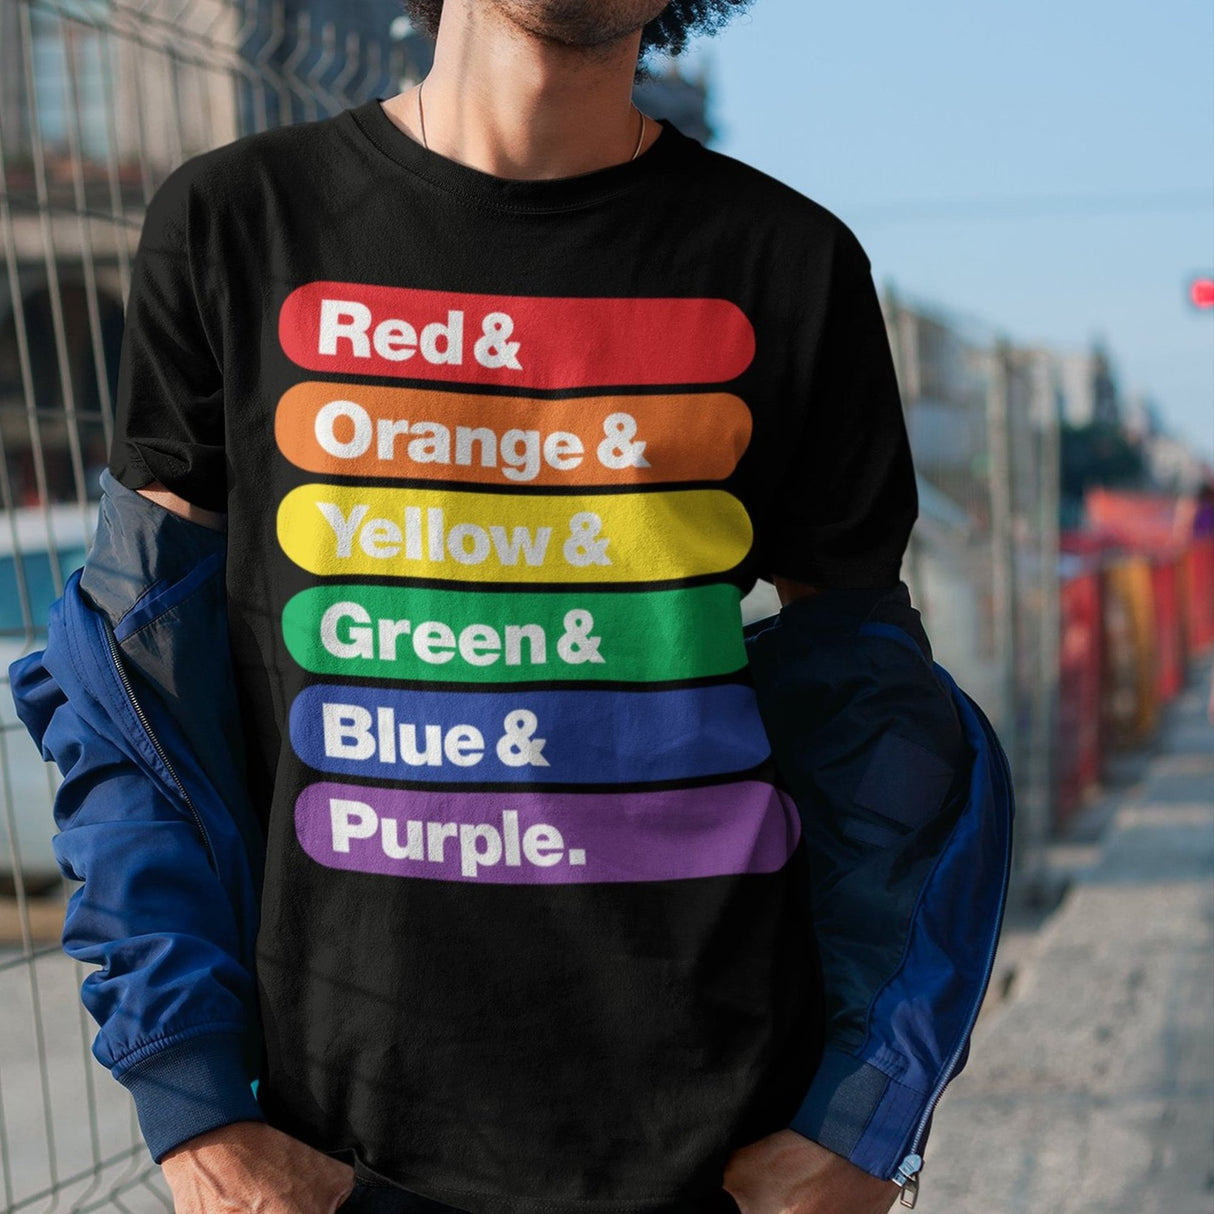 red-orange-yellow-green-blue-purple-blue-tee-green-t-shirt-orange-tee-lgbt-t-shirt-lifestyle-tee#color_black